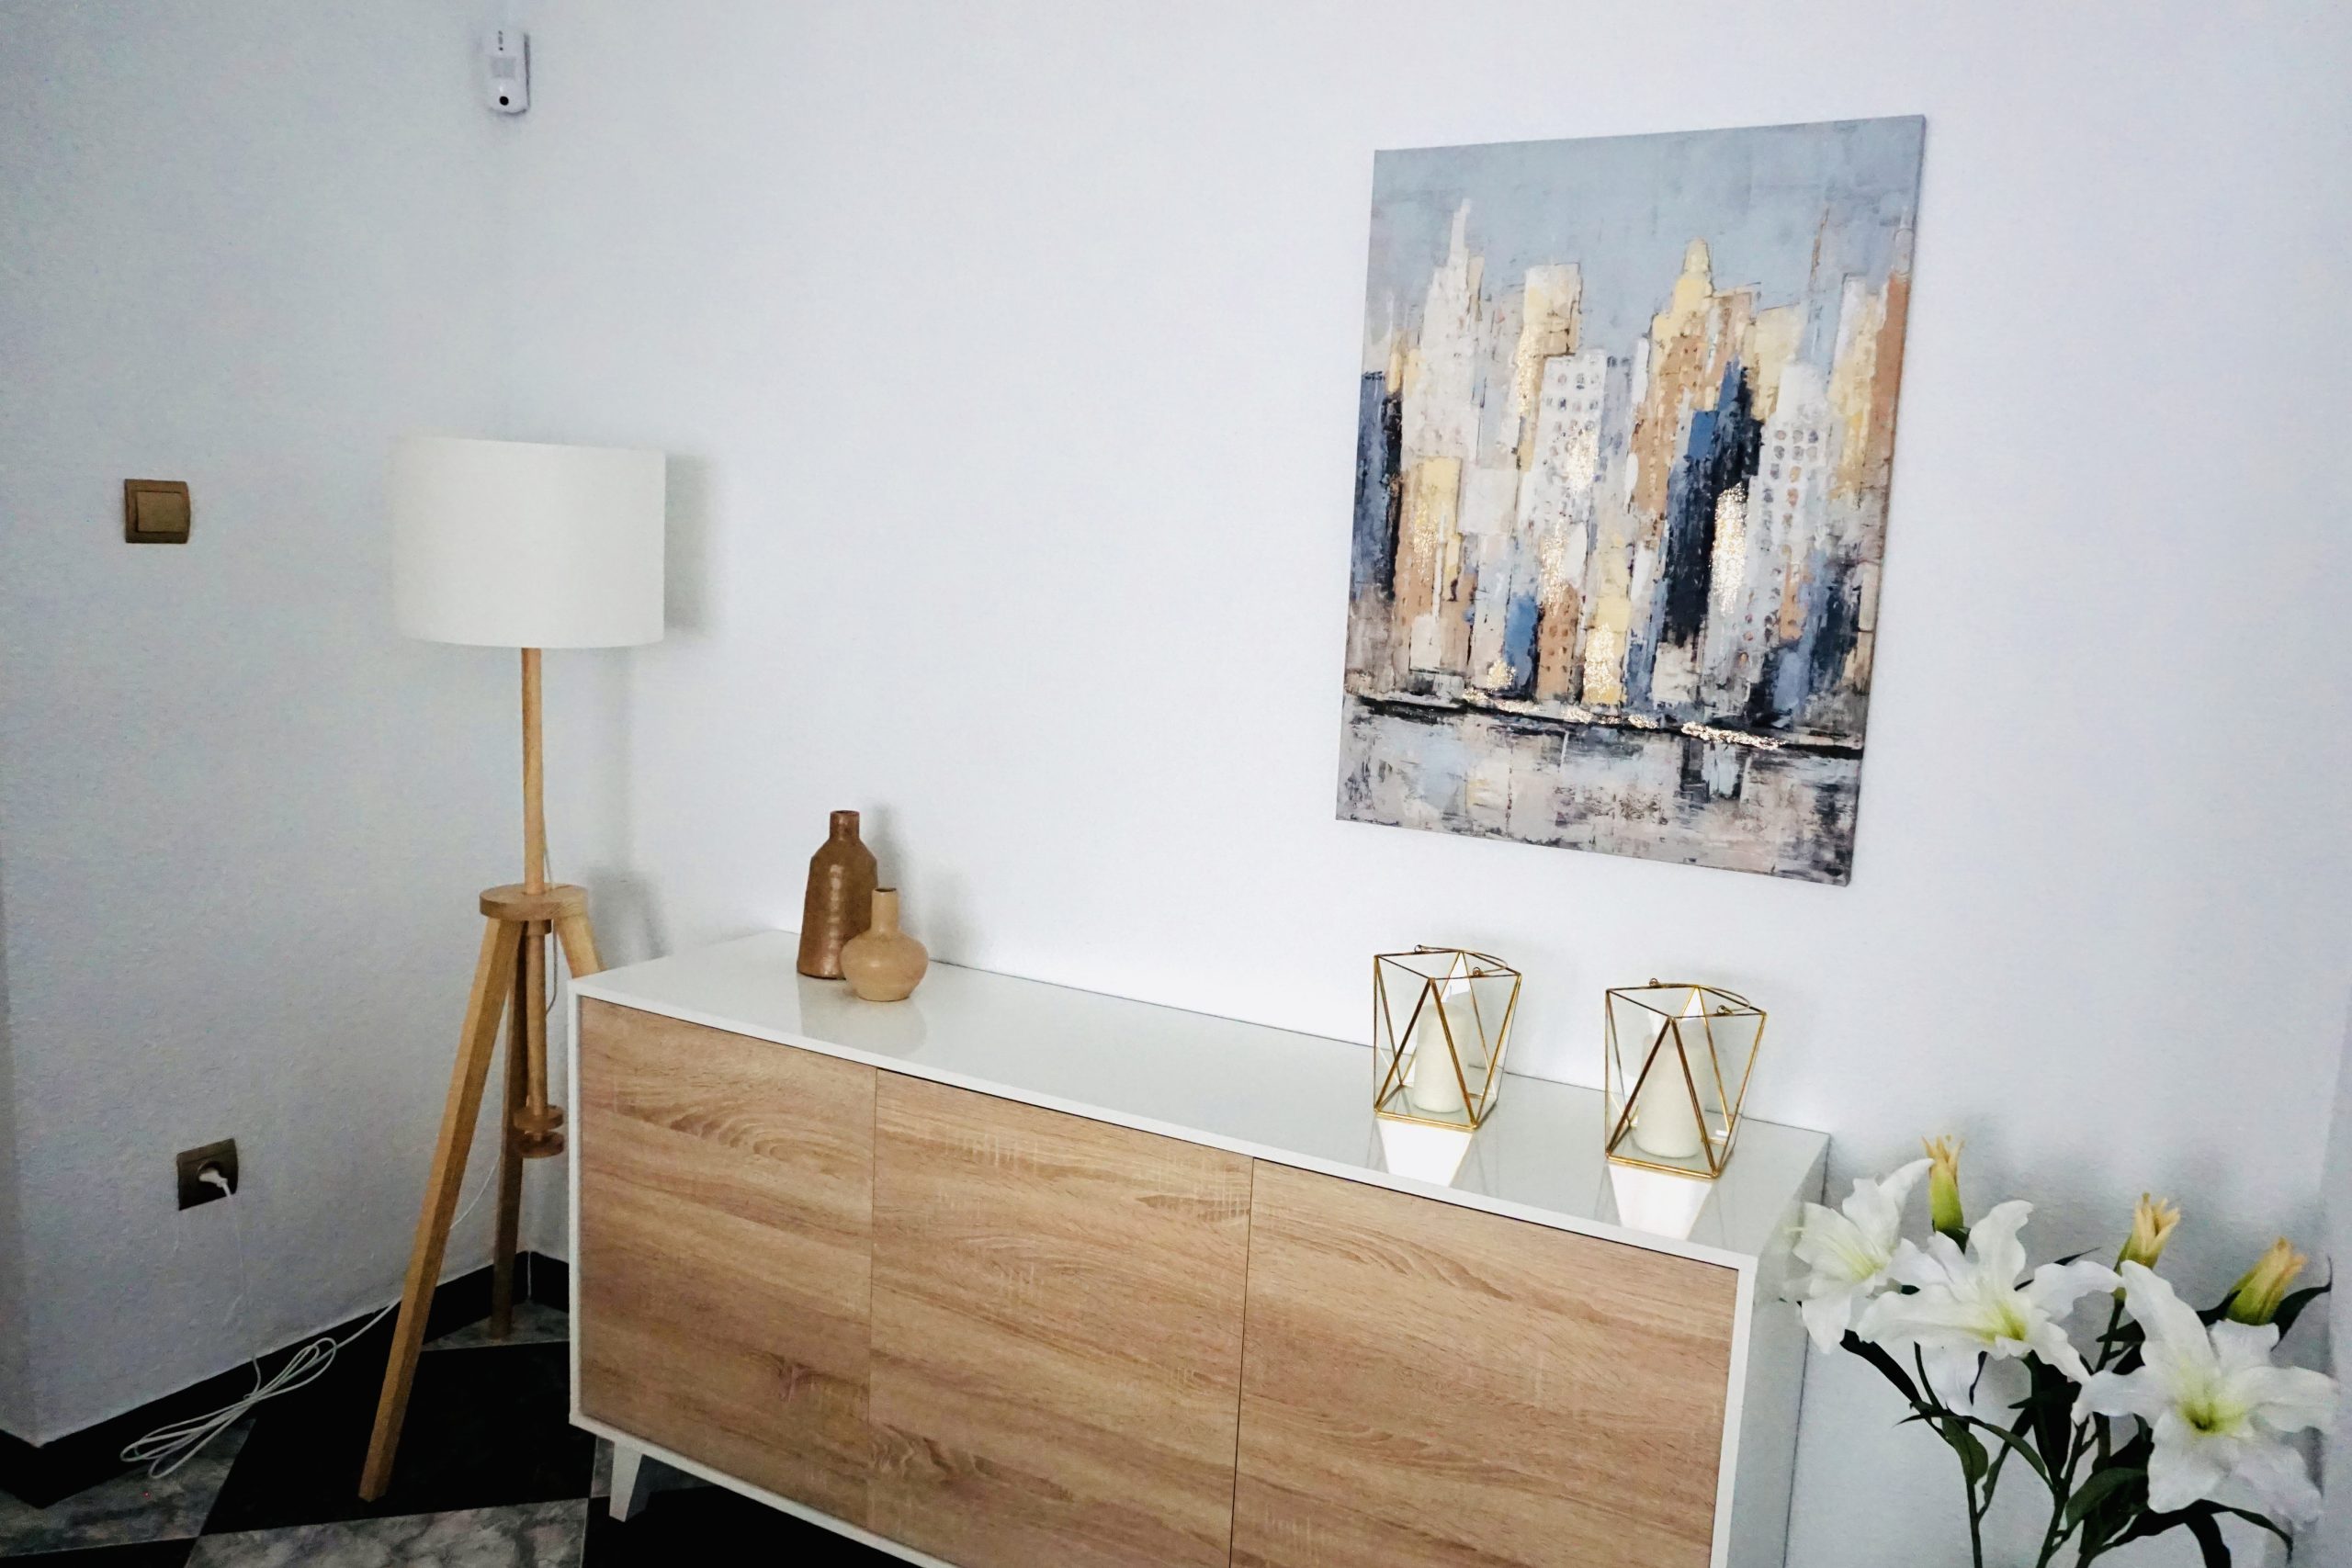 apartment for rent in Malaga - livingroom